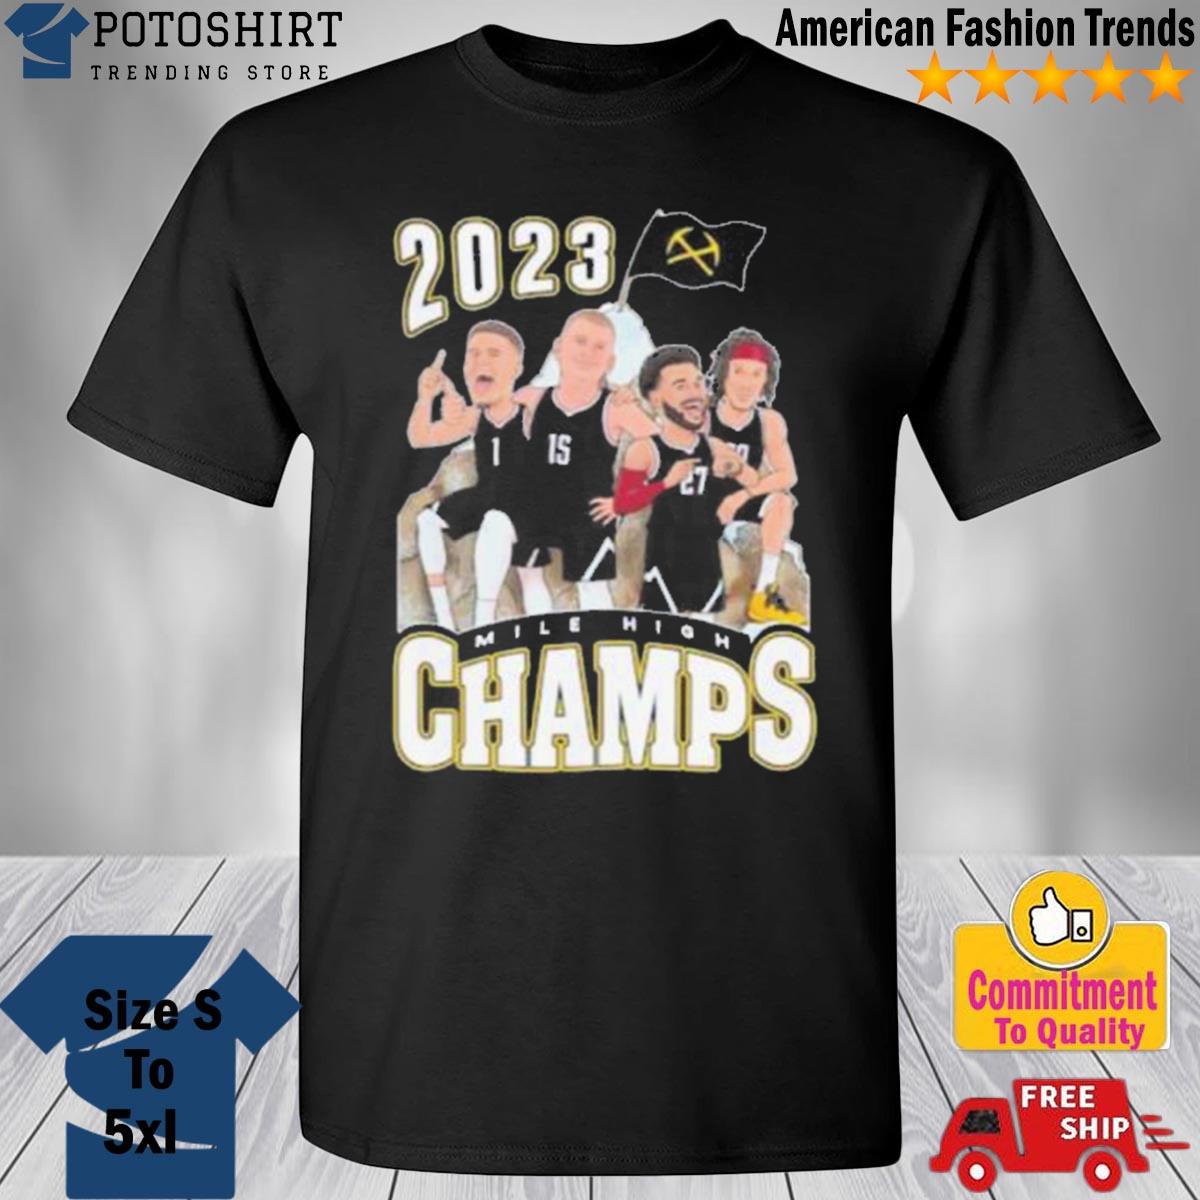 Potoshirt.com - Product denver Nuggets Mile High Champs 2023 shirt